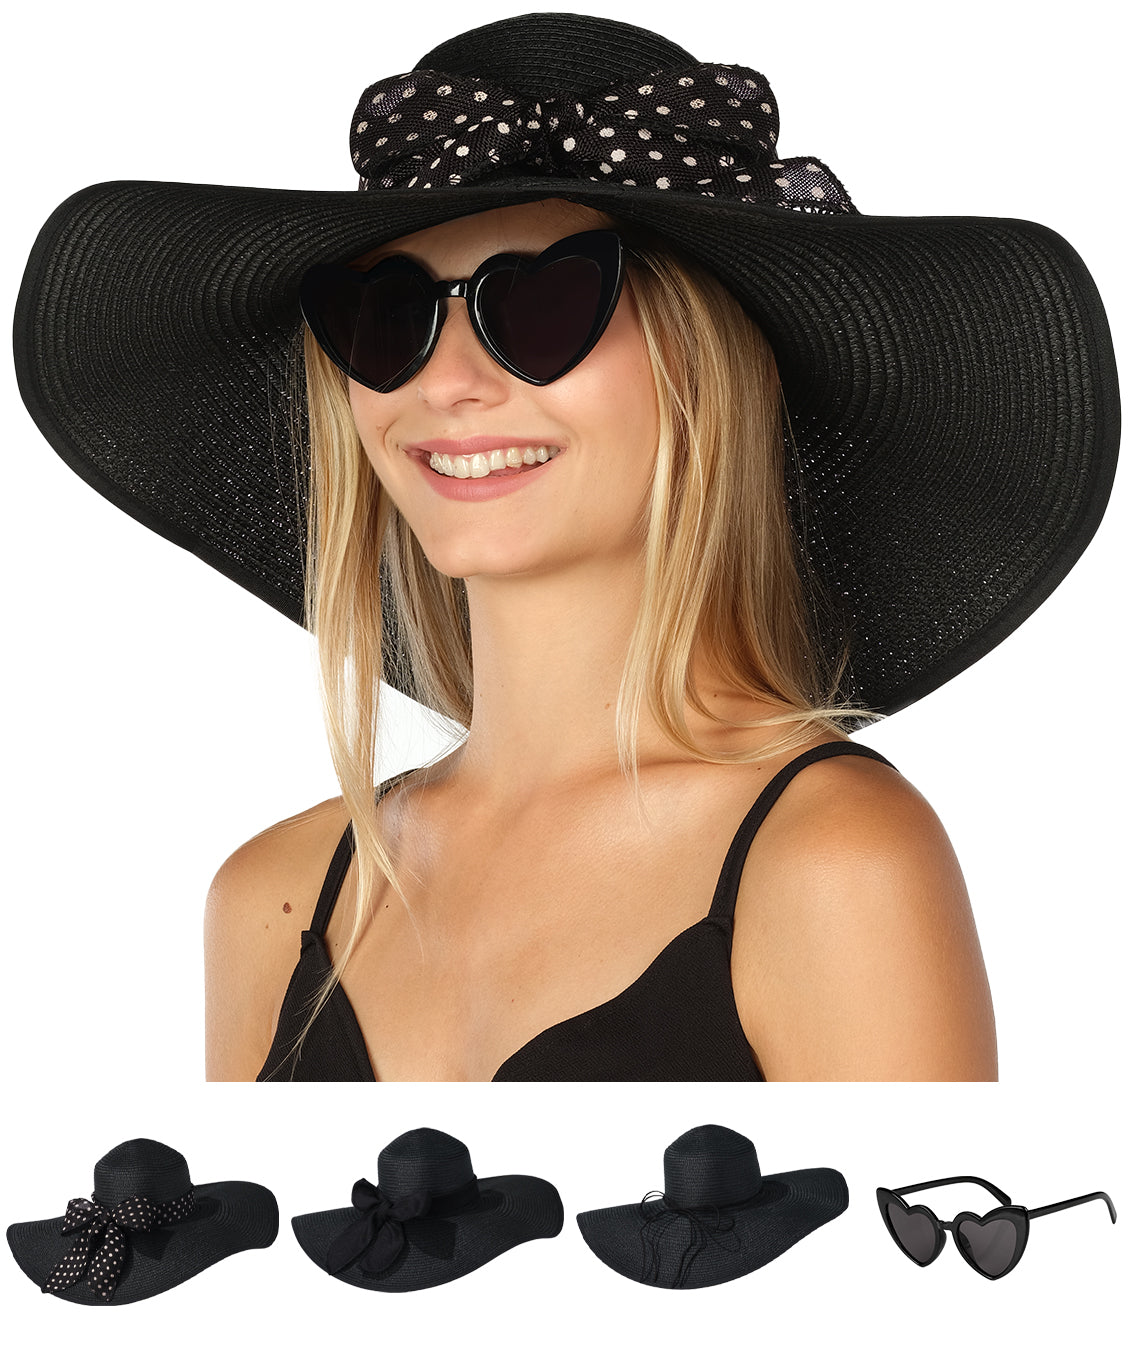 lydia deetz hat, sombreros de verano, fancy hats Panama hats for women foldable, sun hat upf 50 bolsos de playa para mujer, solar escape hats, fancy hats for women hatsf hats women, flippy hat ladies hats with brim, oversized beach hat